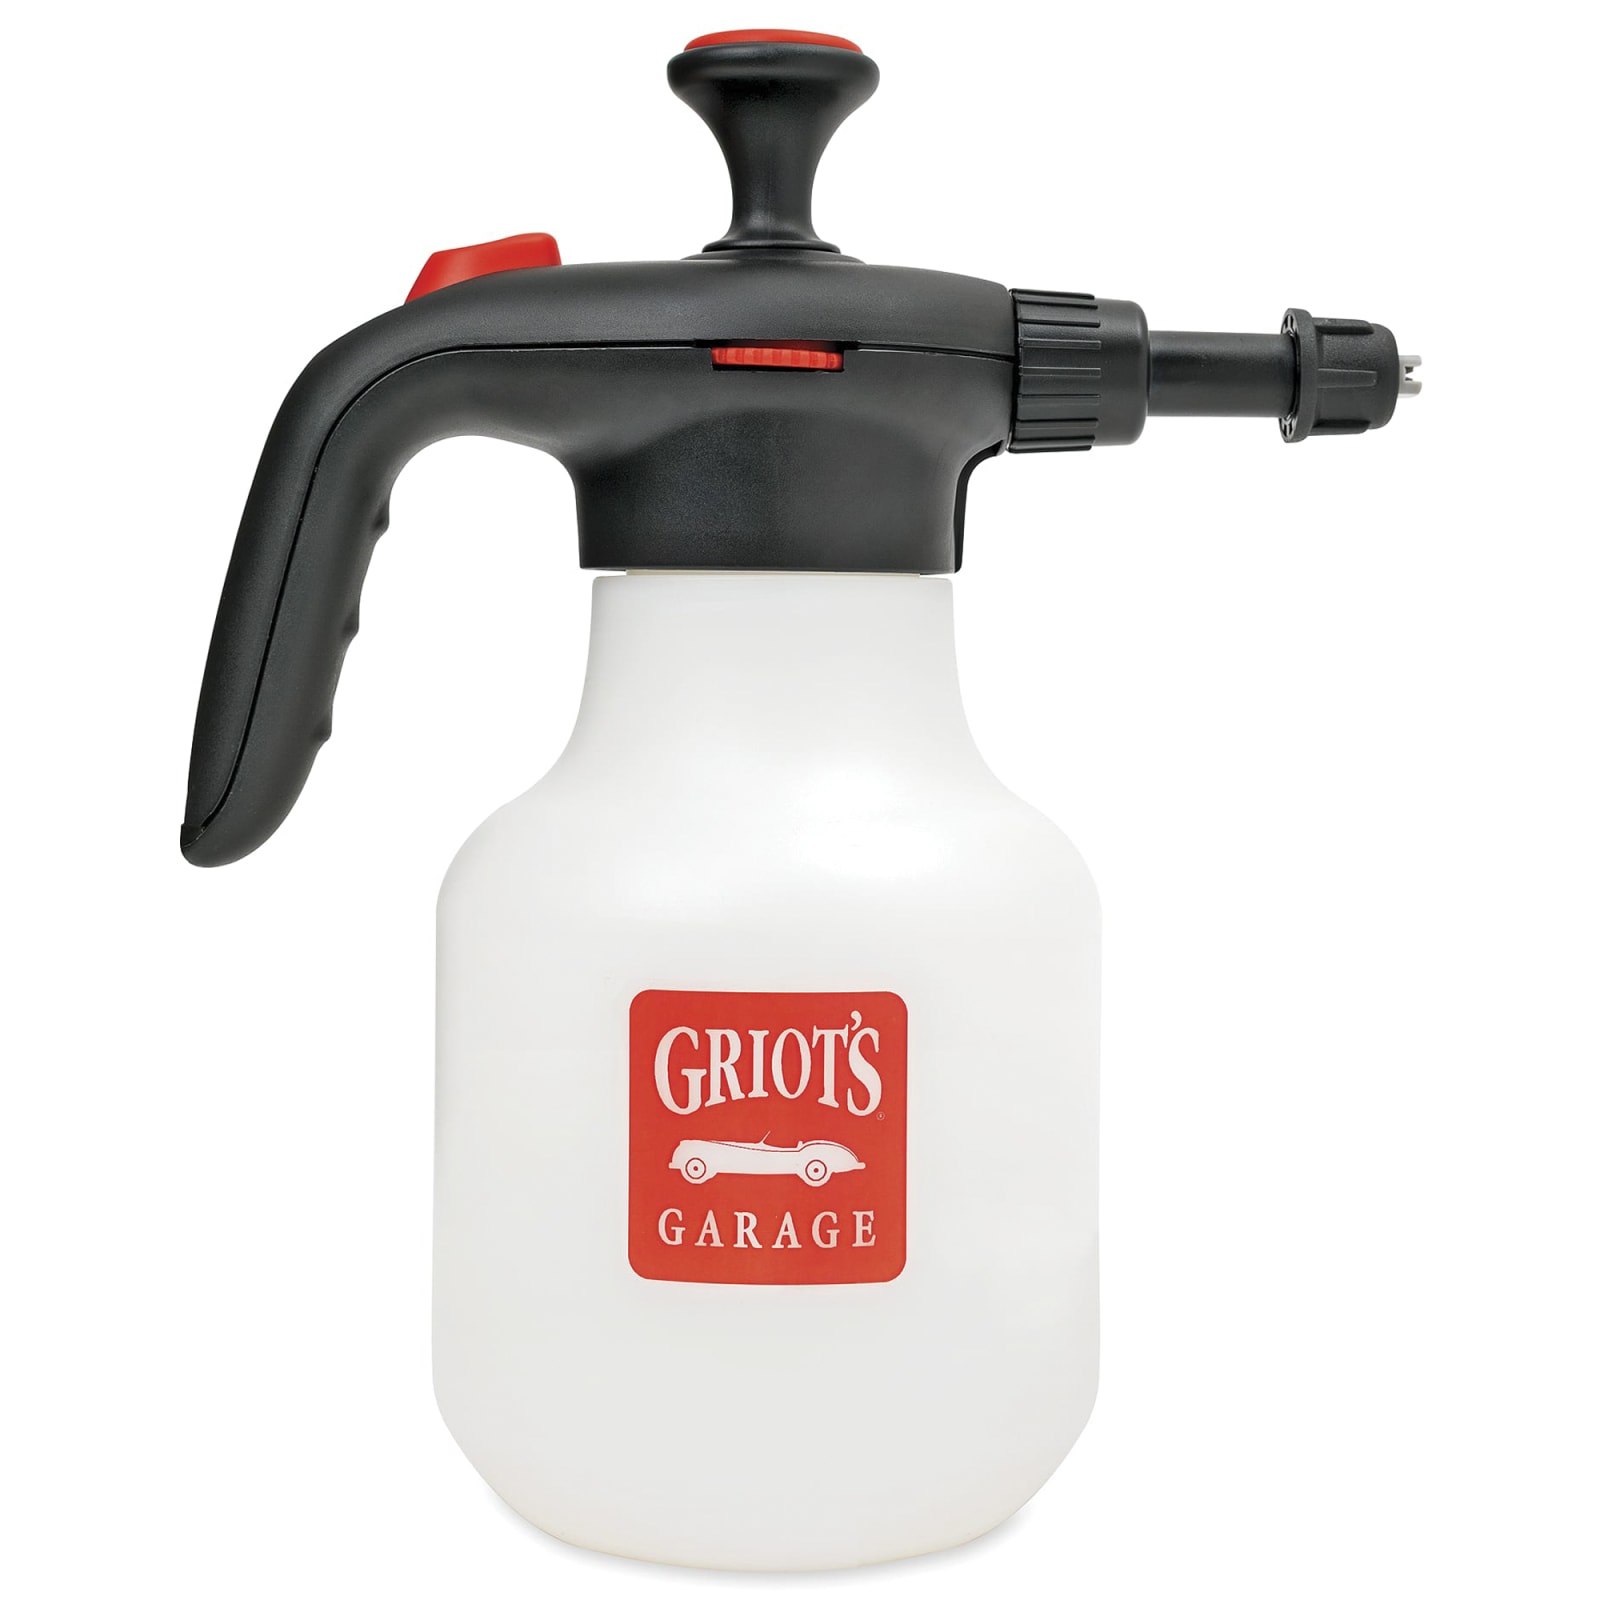 Finest Water Hose Nozzle for Cars & Garage - Griot's Garage